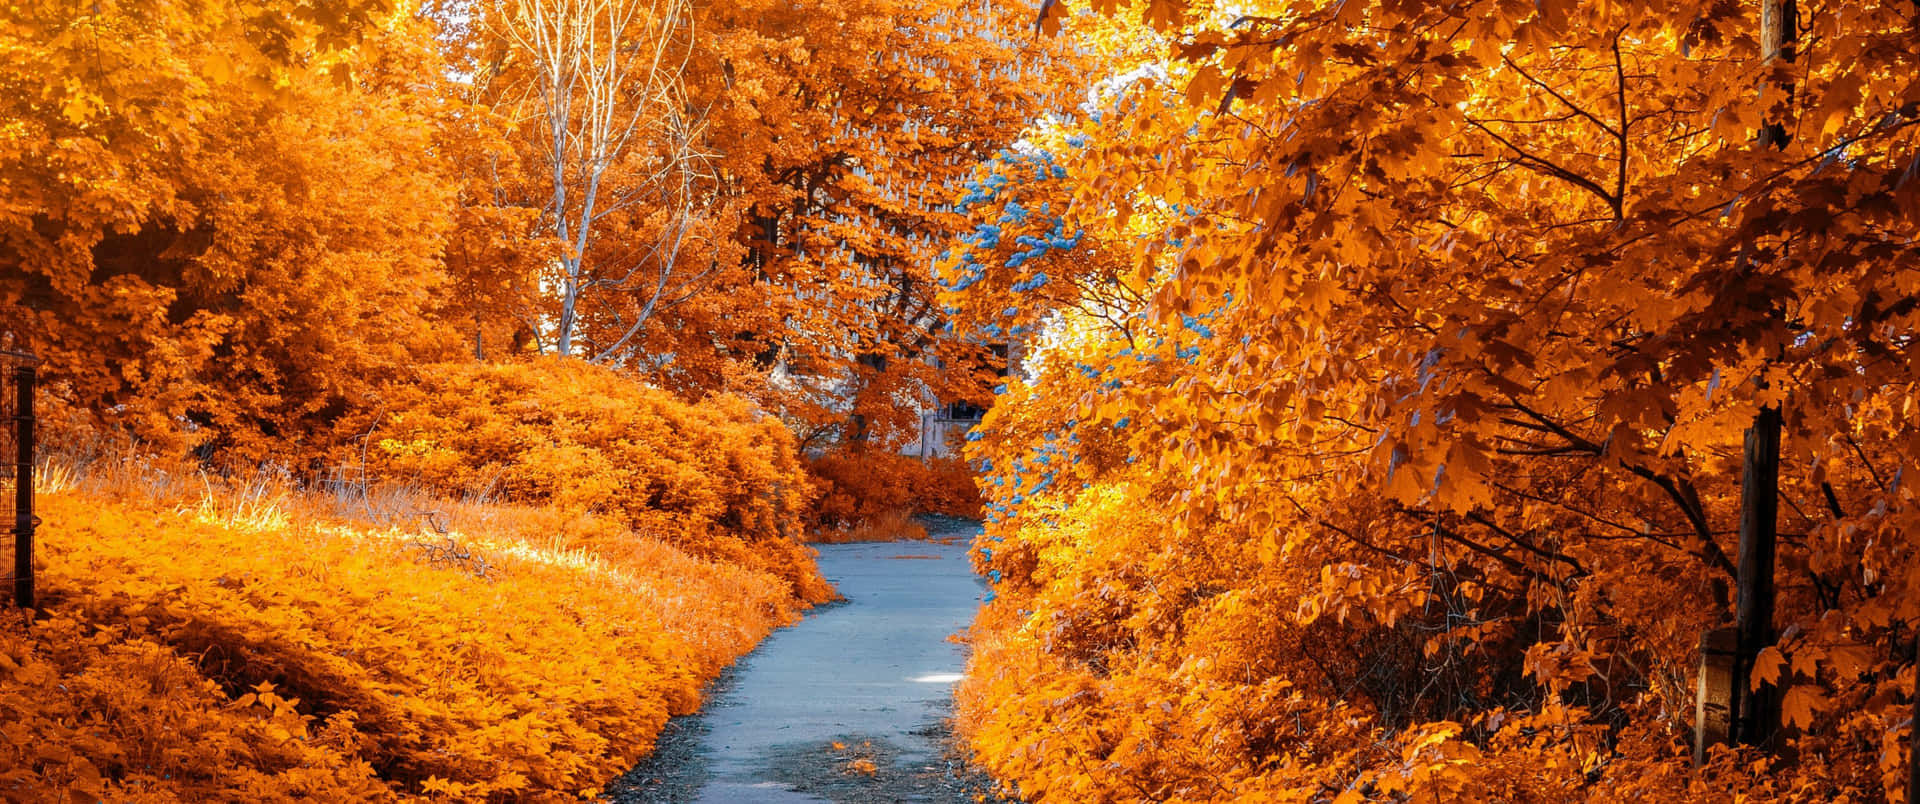 Fall Into the Season of Color Wallpaper